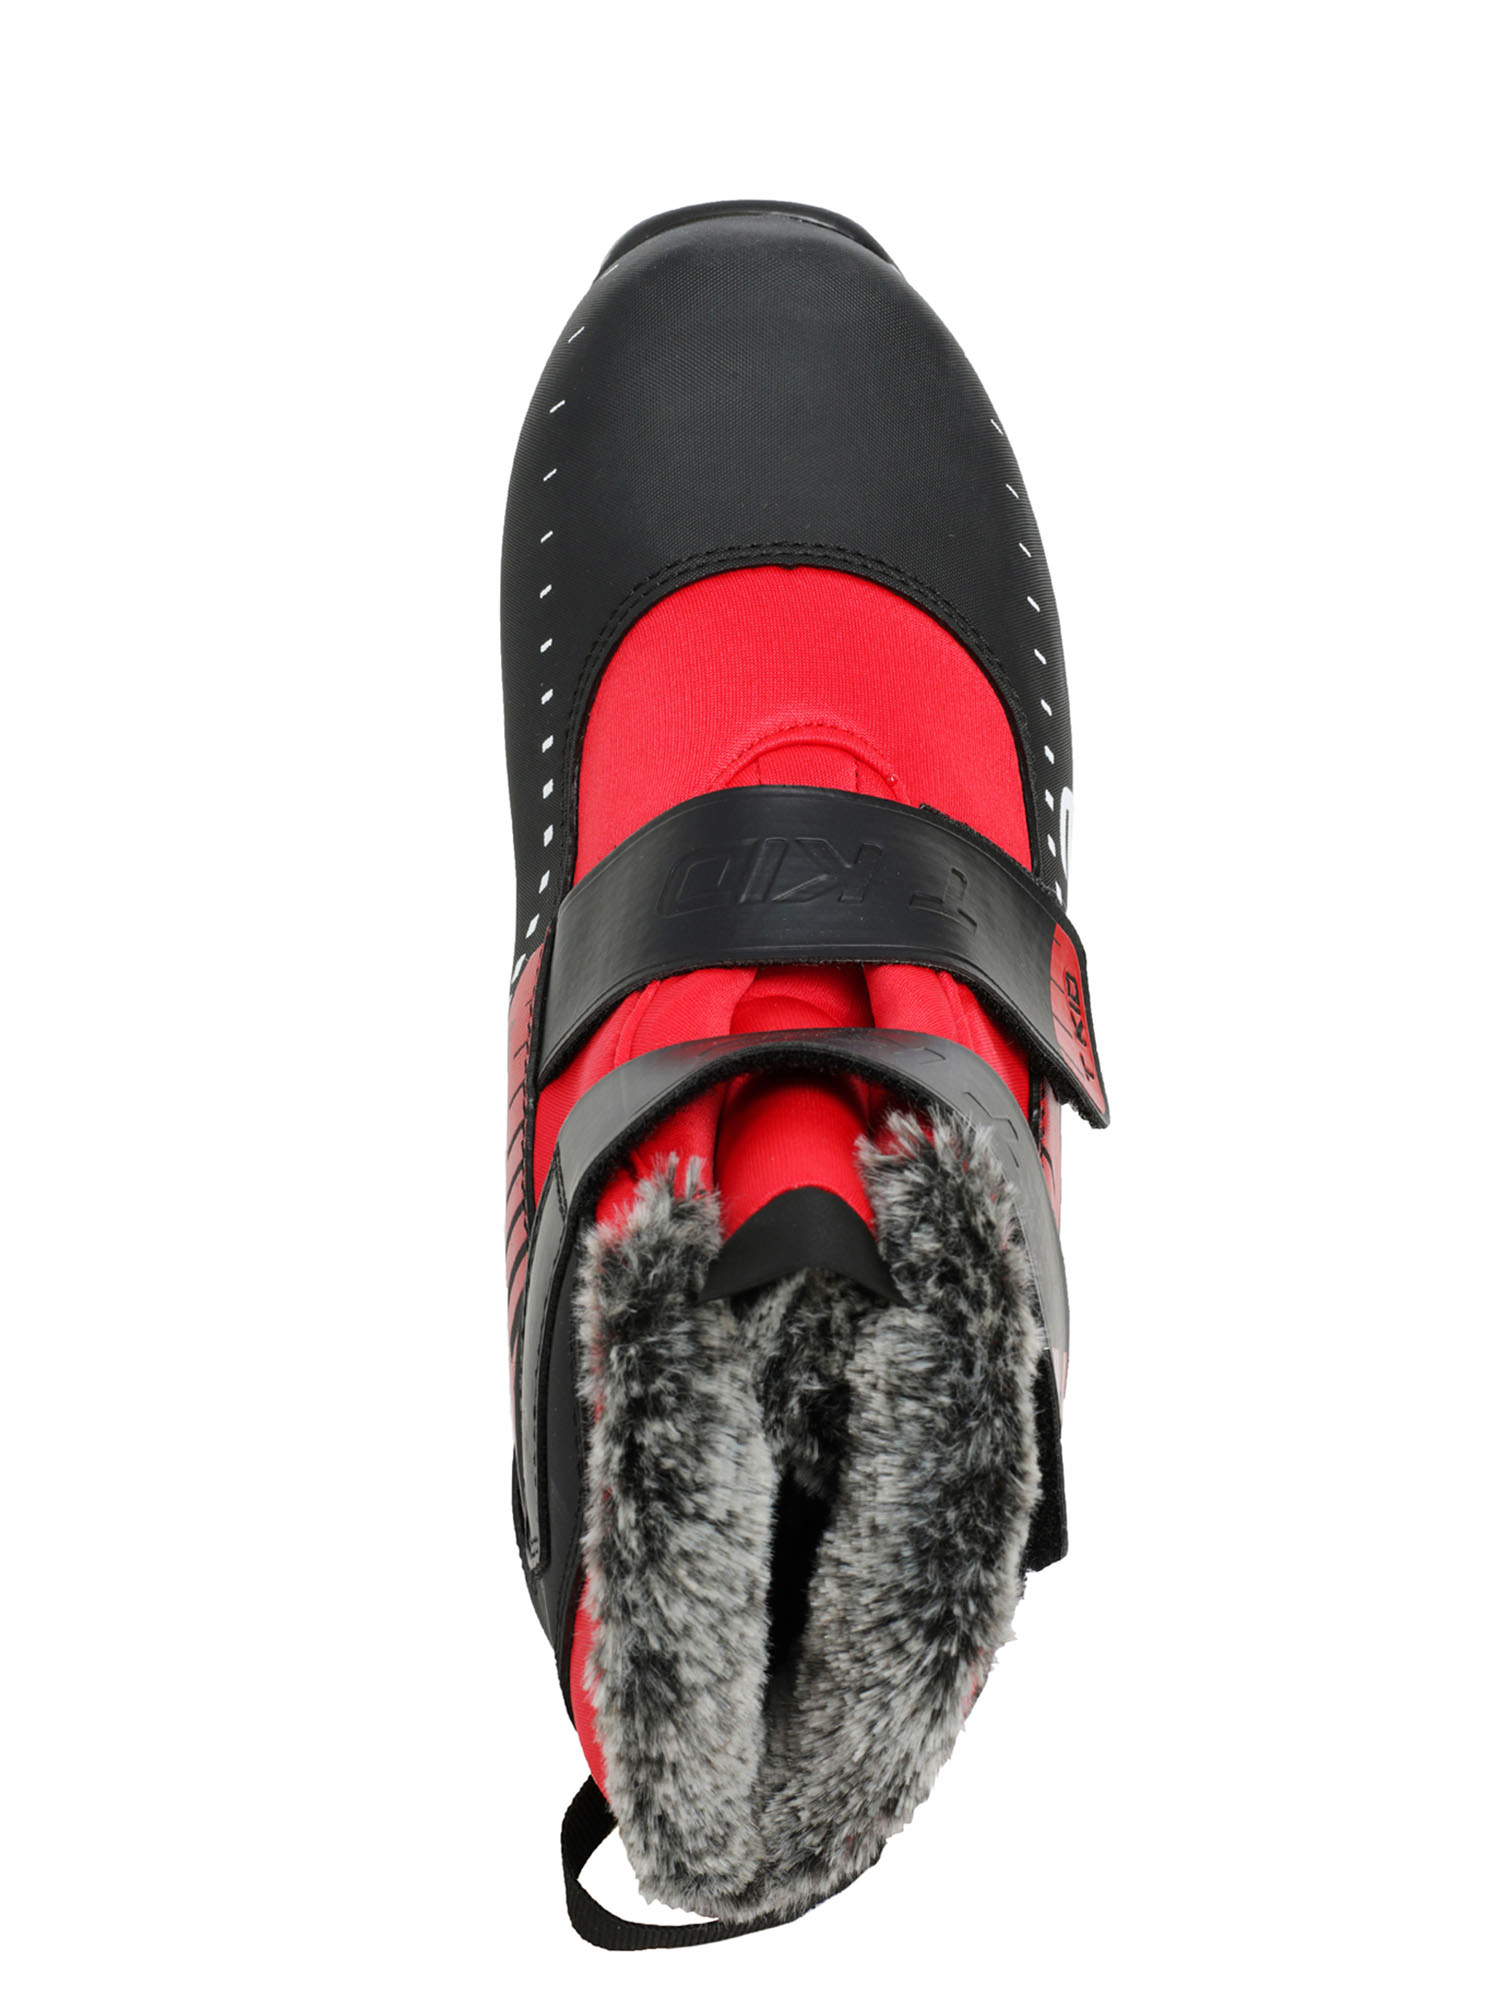 Лыжные ботинки Alpina. T KID Black/White/Red